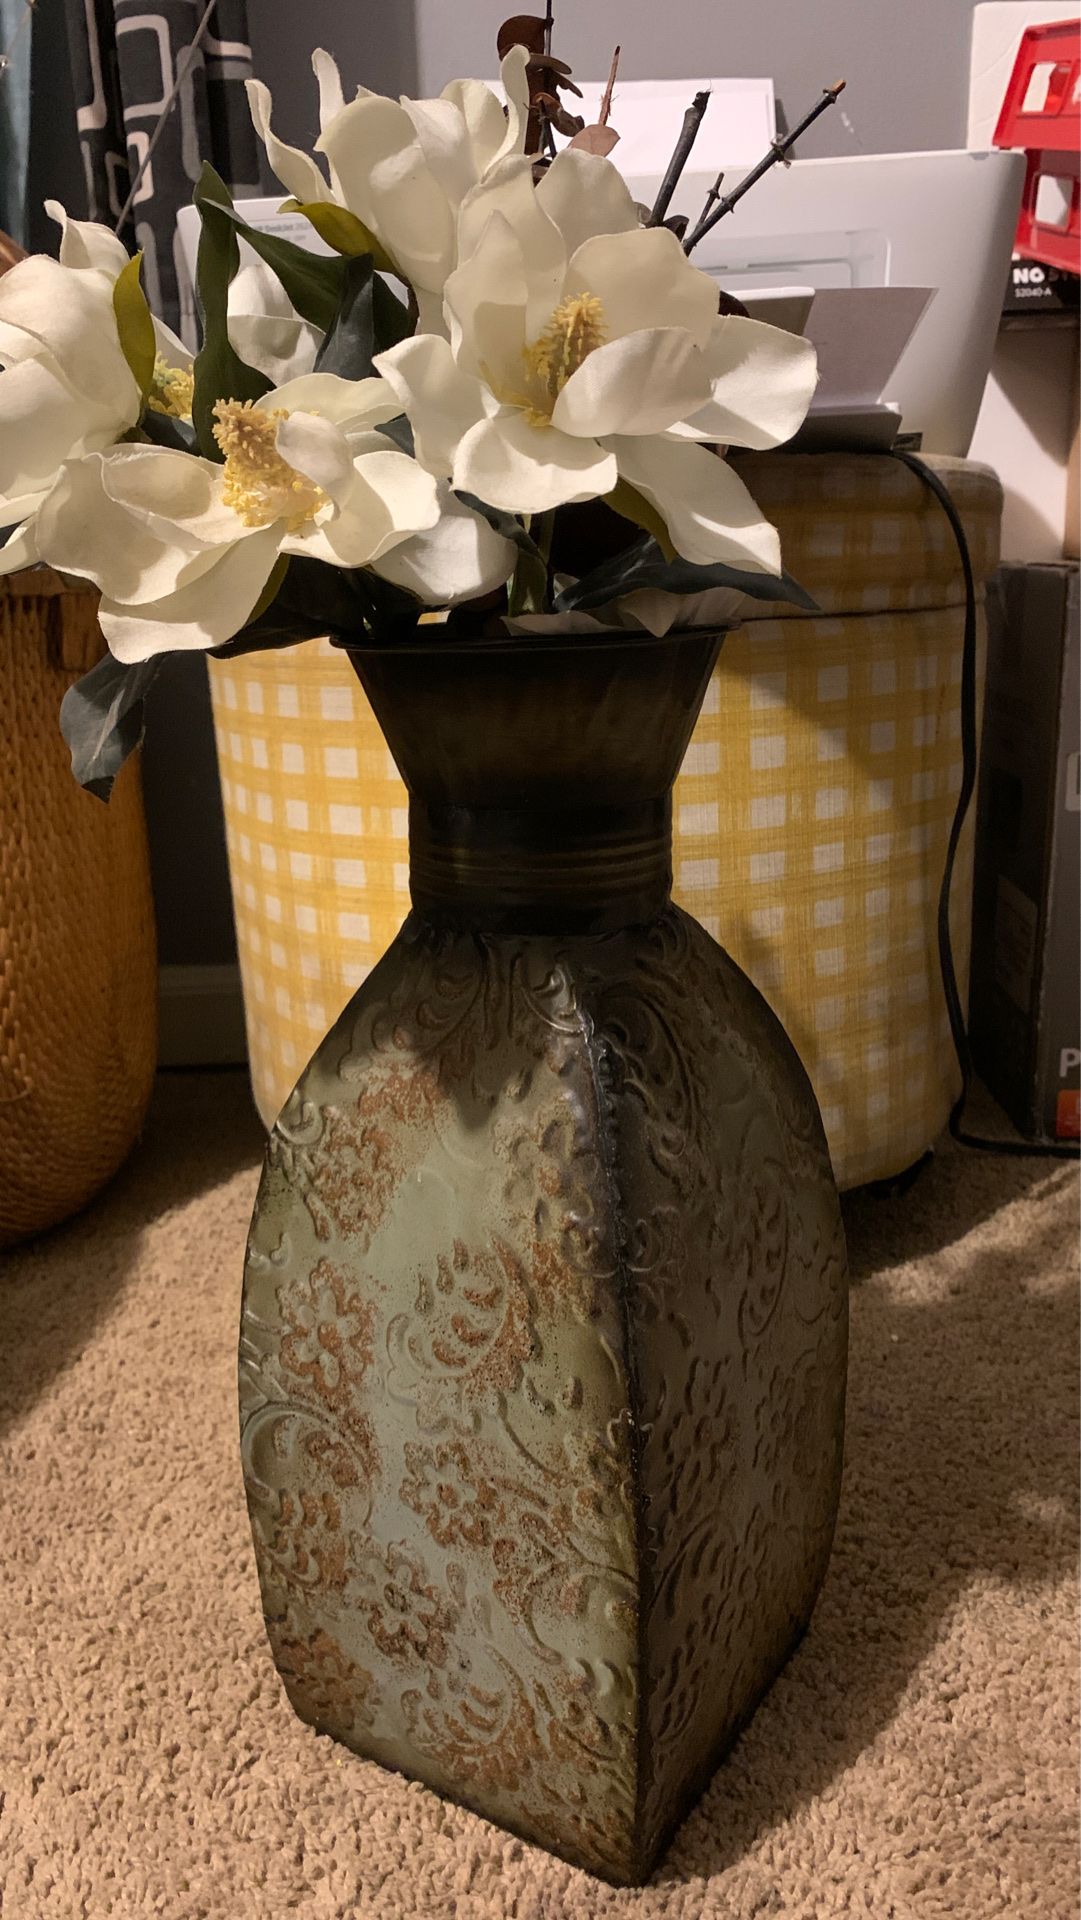 #vase #green/brown #decor #flowers #pot #metal